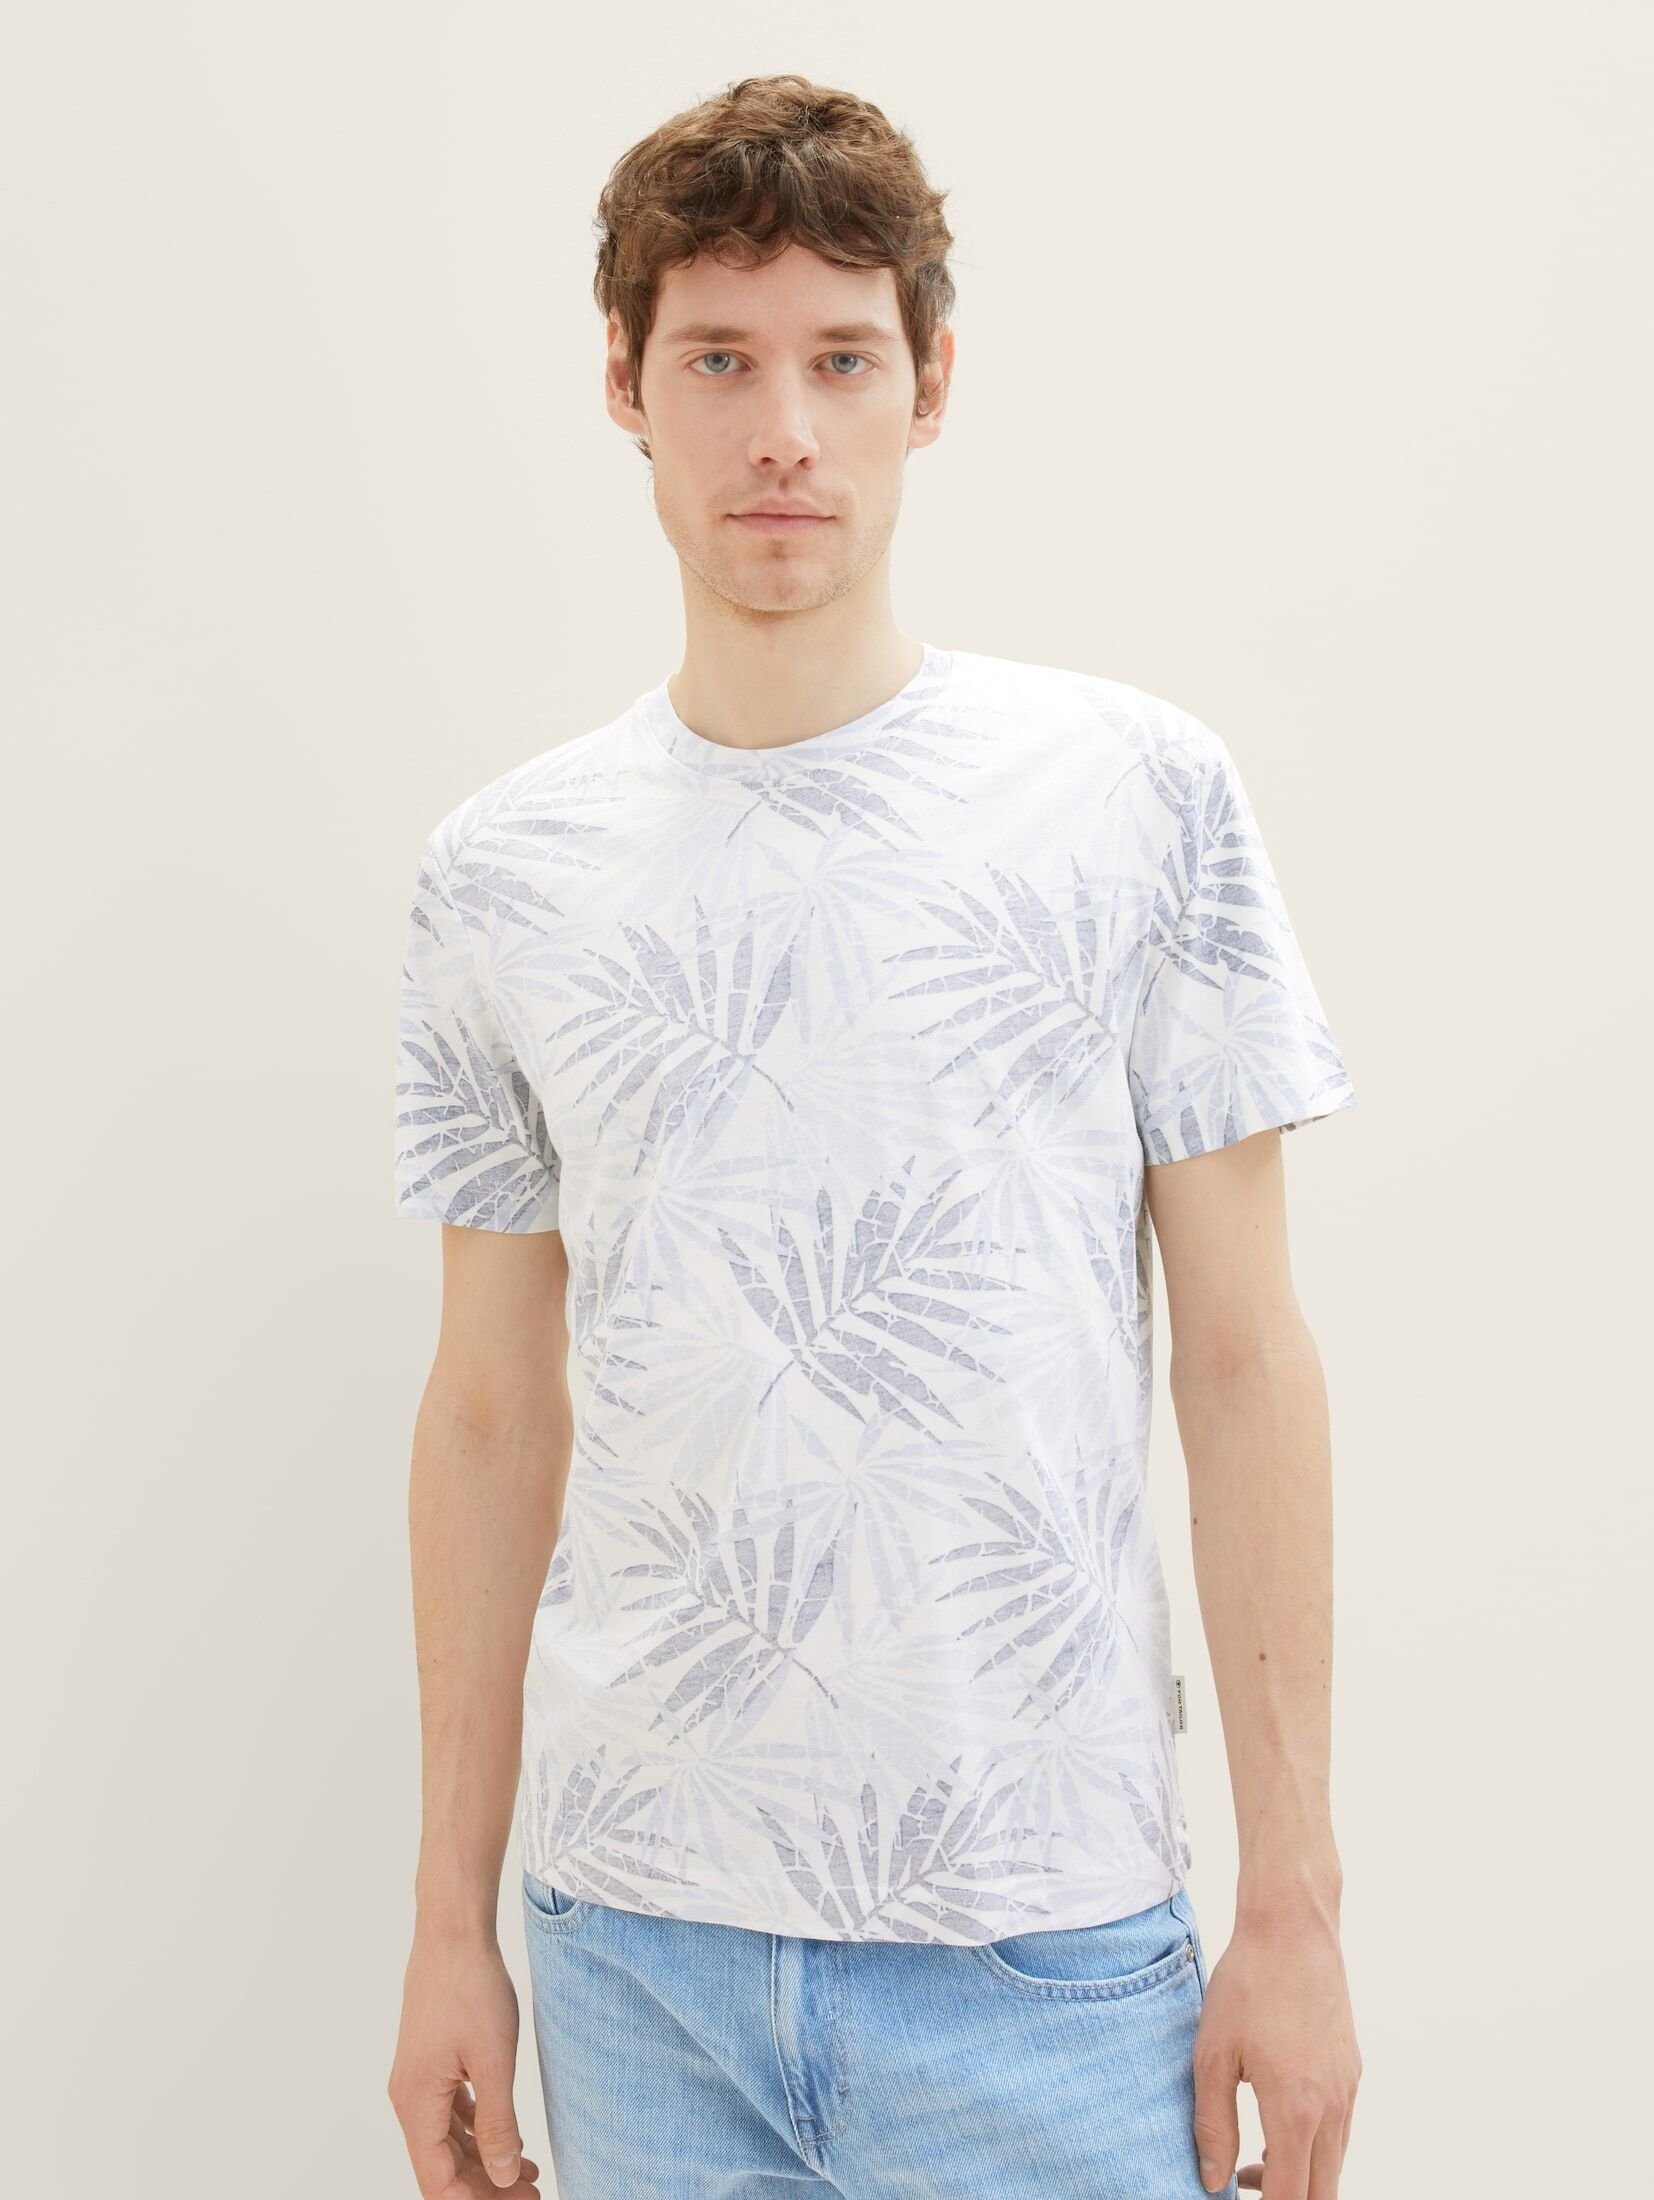 TAILOR design light TOM tonal mit leaf blue Allover-Print T-Shirt T-Shirt